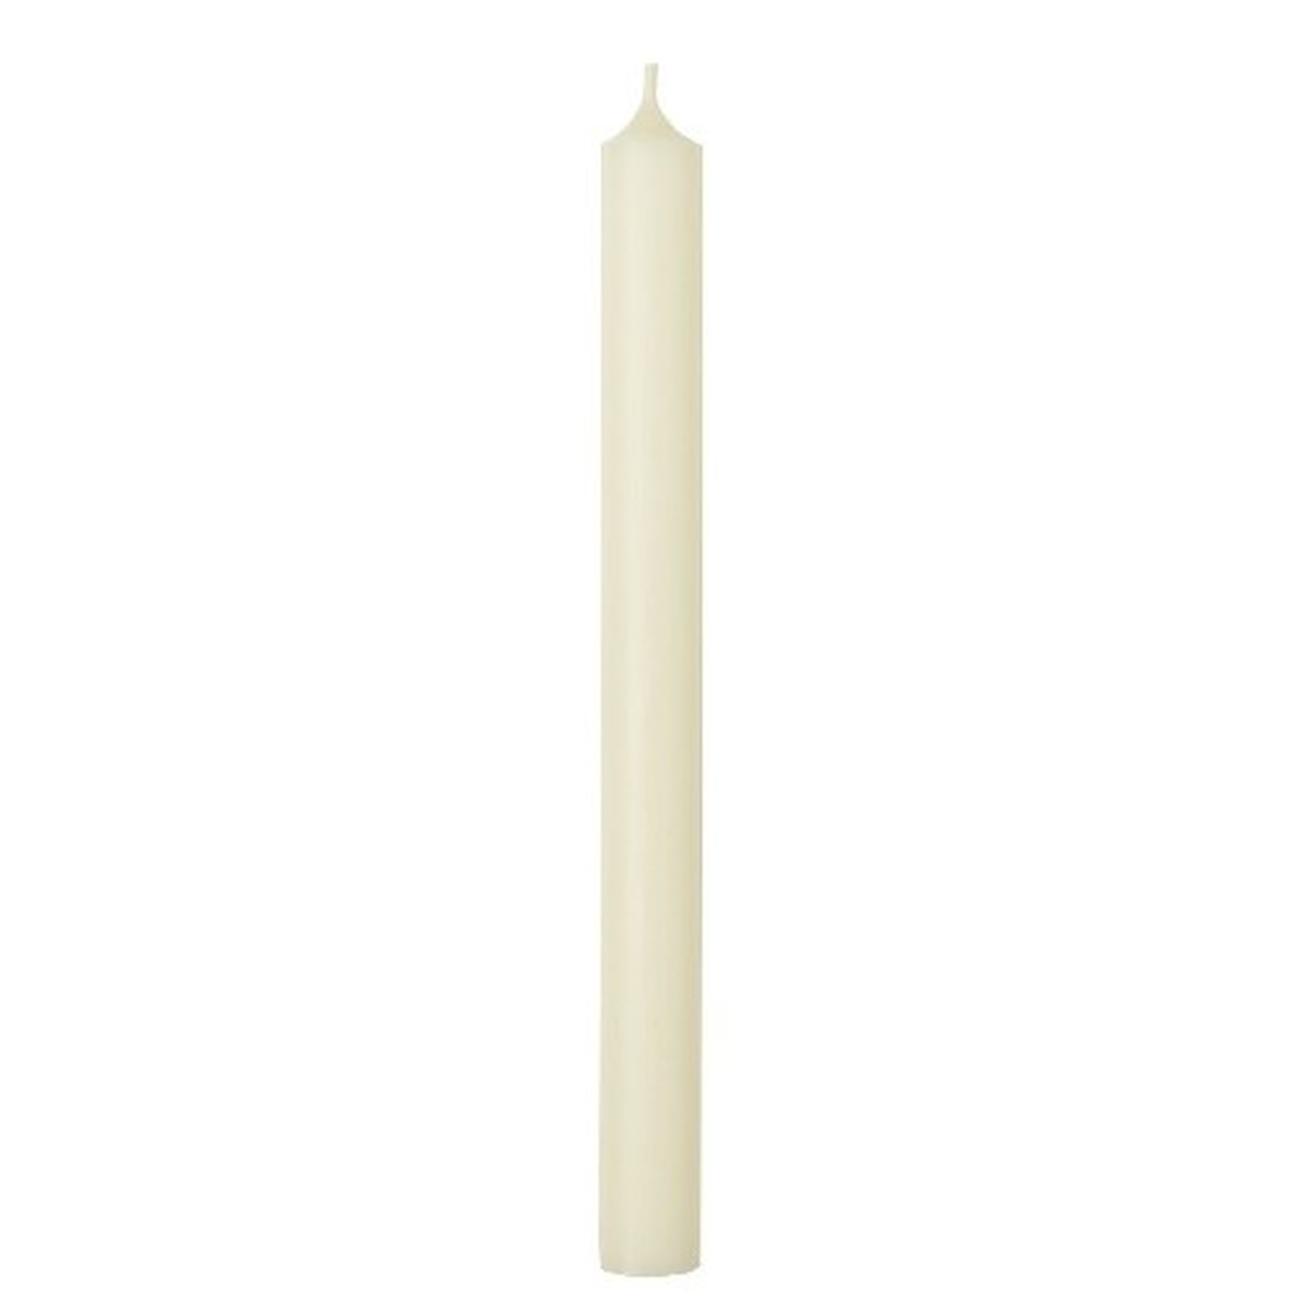 ihr-cylinder-candle-ivory - IHR Cylinder Candle Ivory